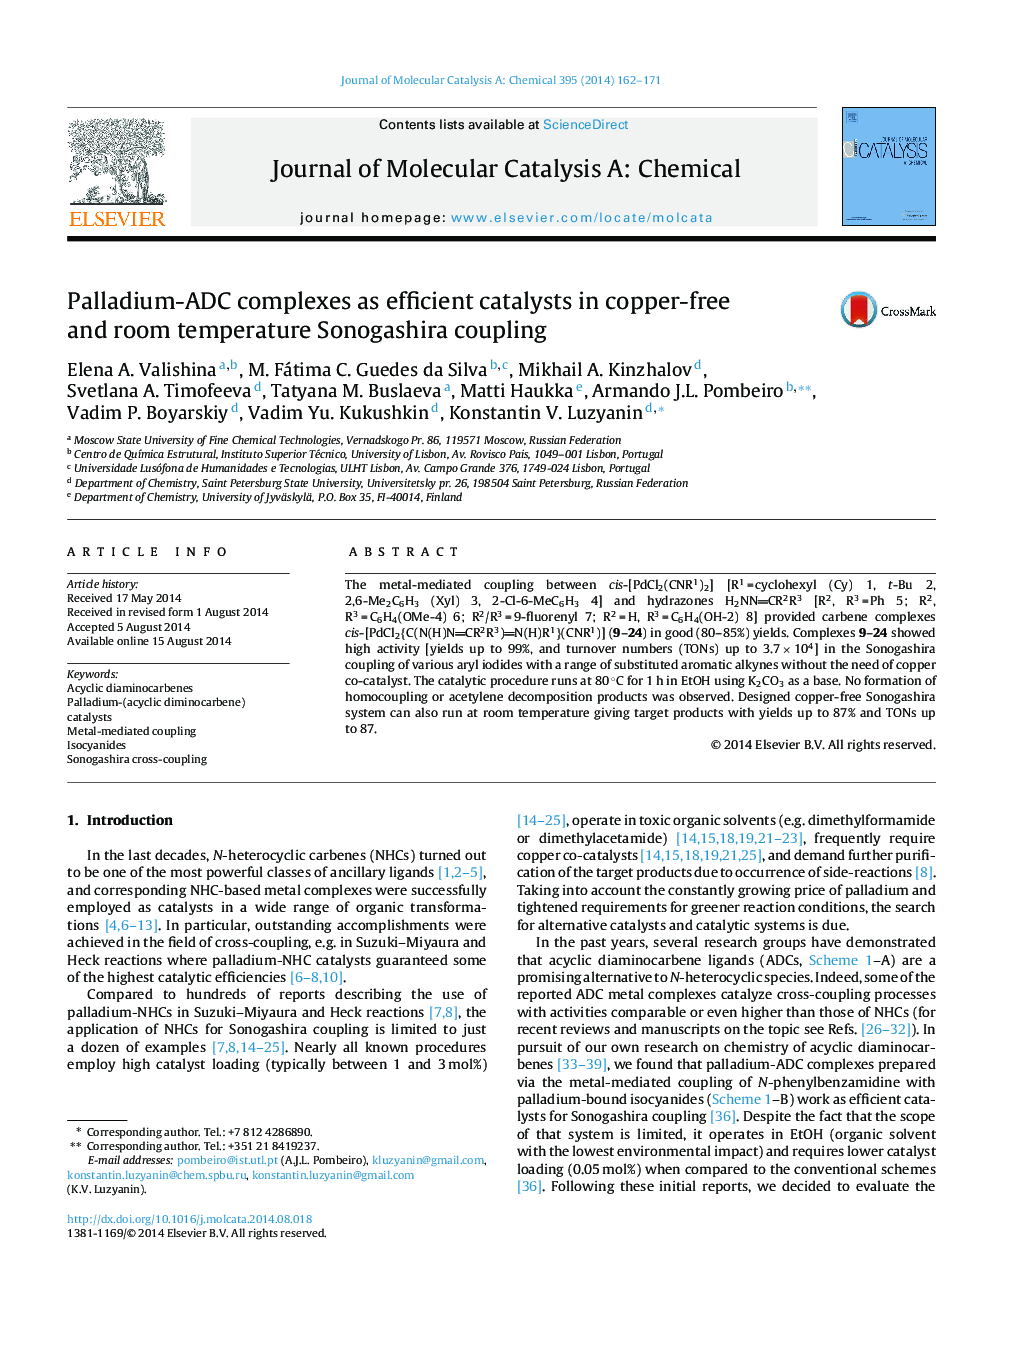 Palladium-ADC complexes as efficient catalysts in copper-free and room temperature Sonogashira coupling